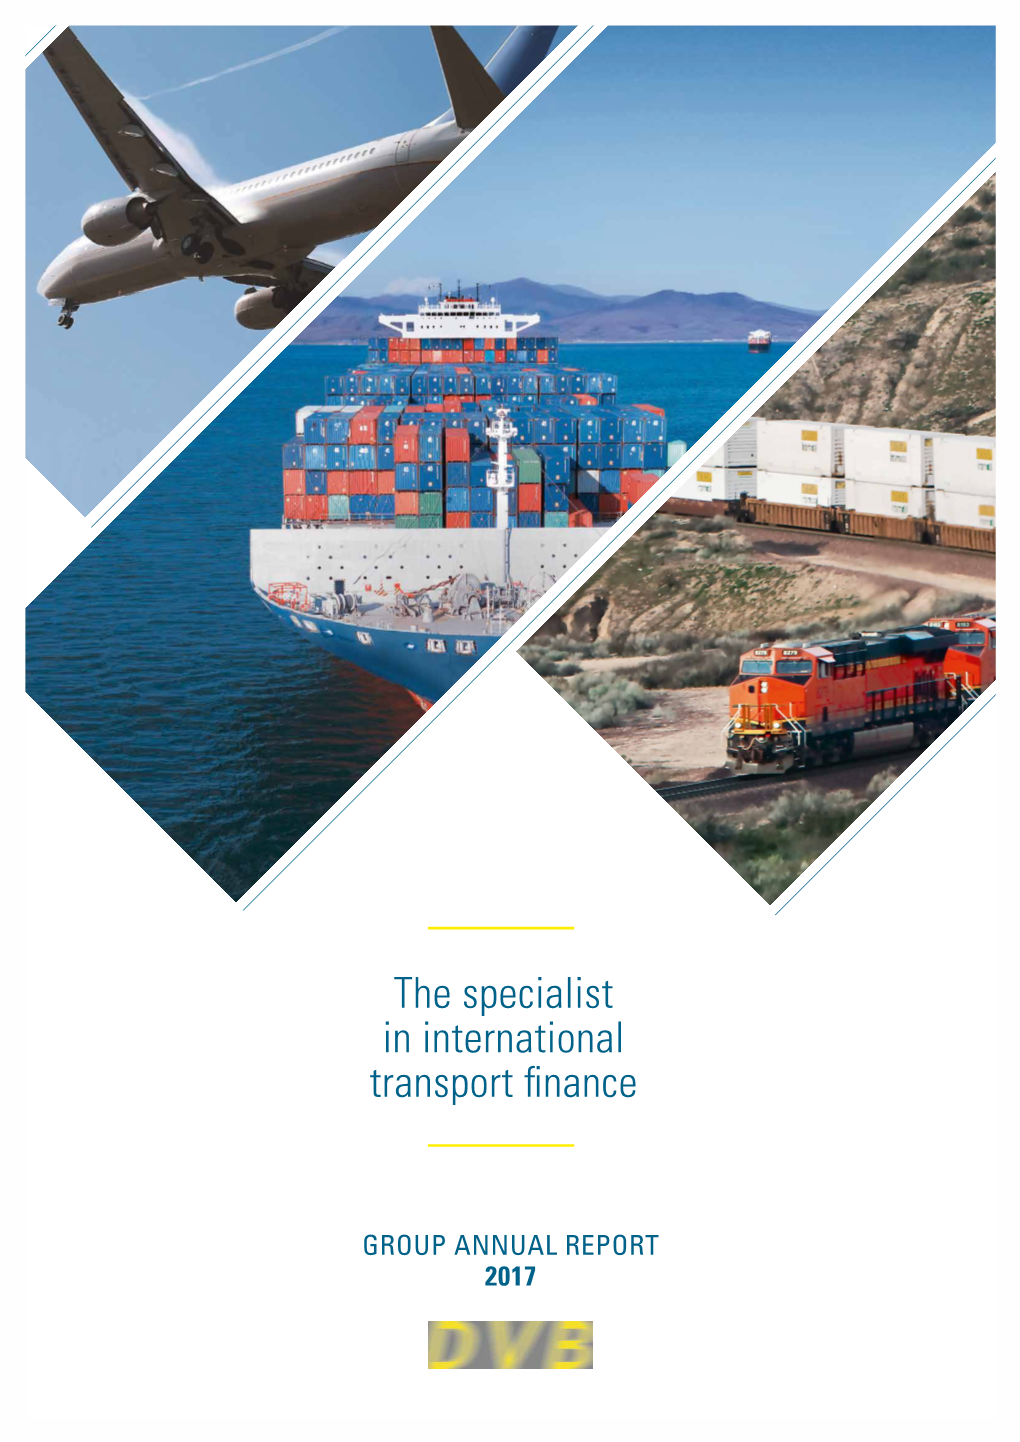 The Specialist in International Transport Finance